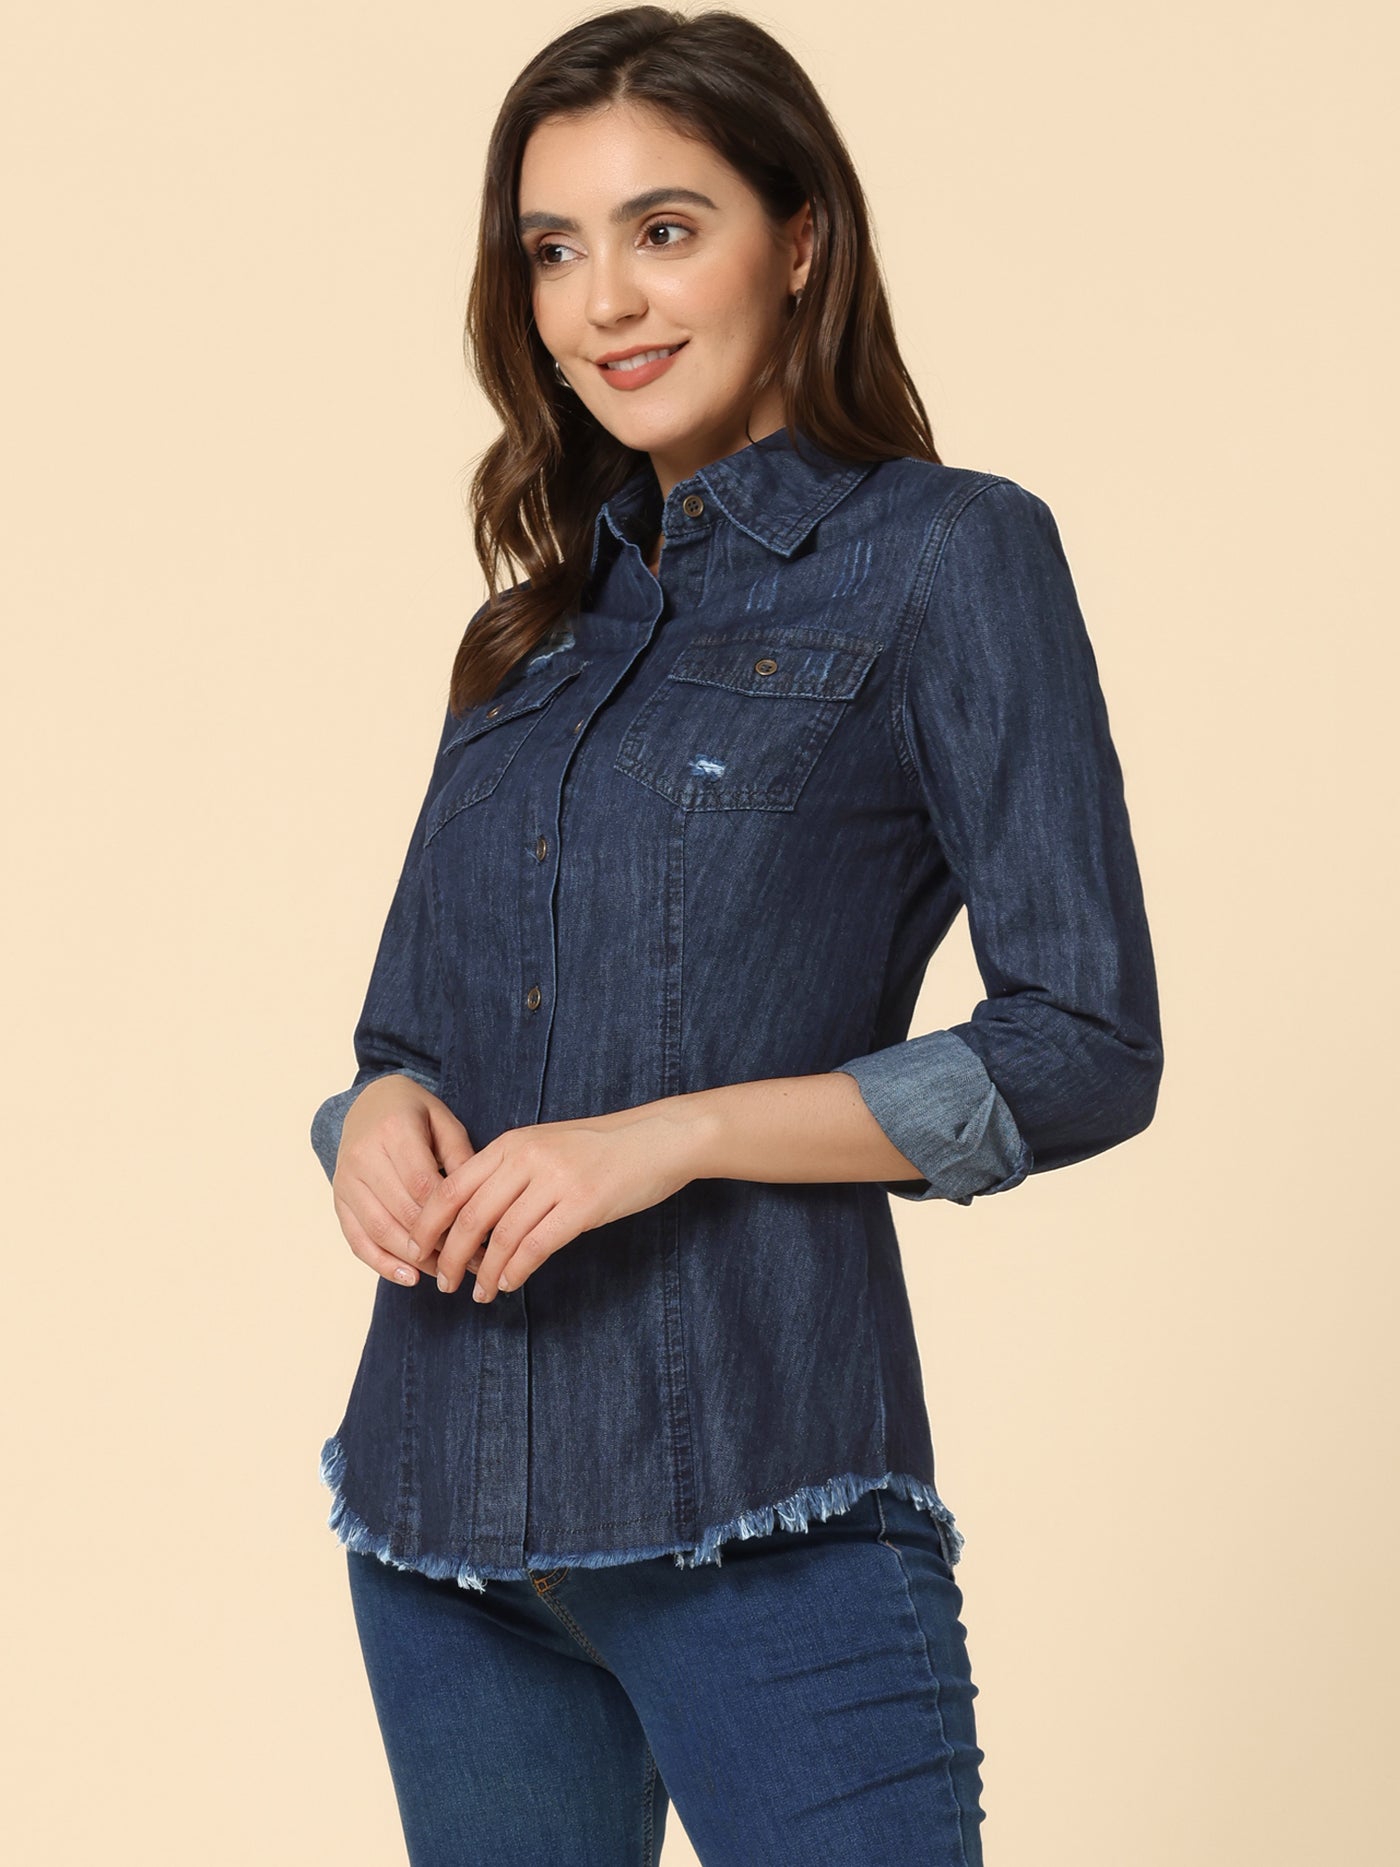 Allegra K Jeans Blouse Long Sleeve Button Down Distressed Frayed Denim Shirt